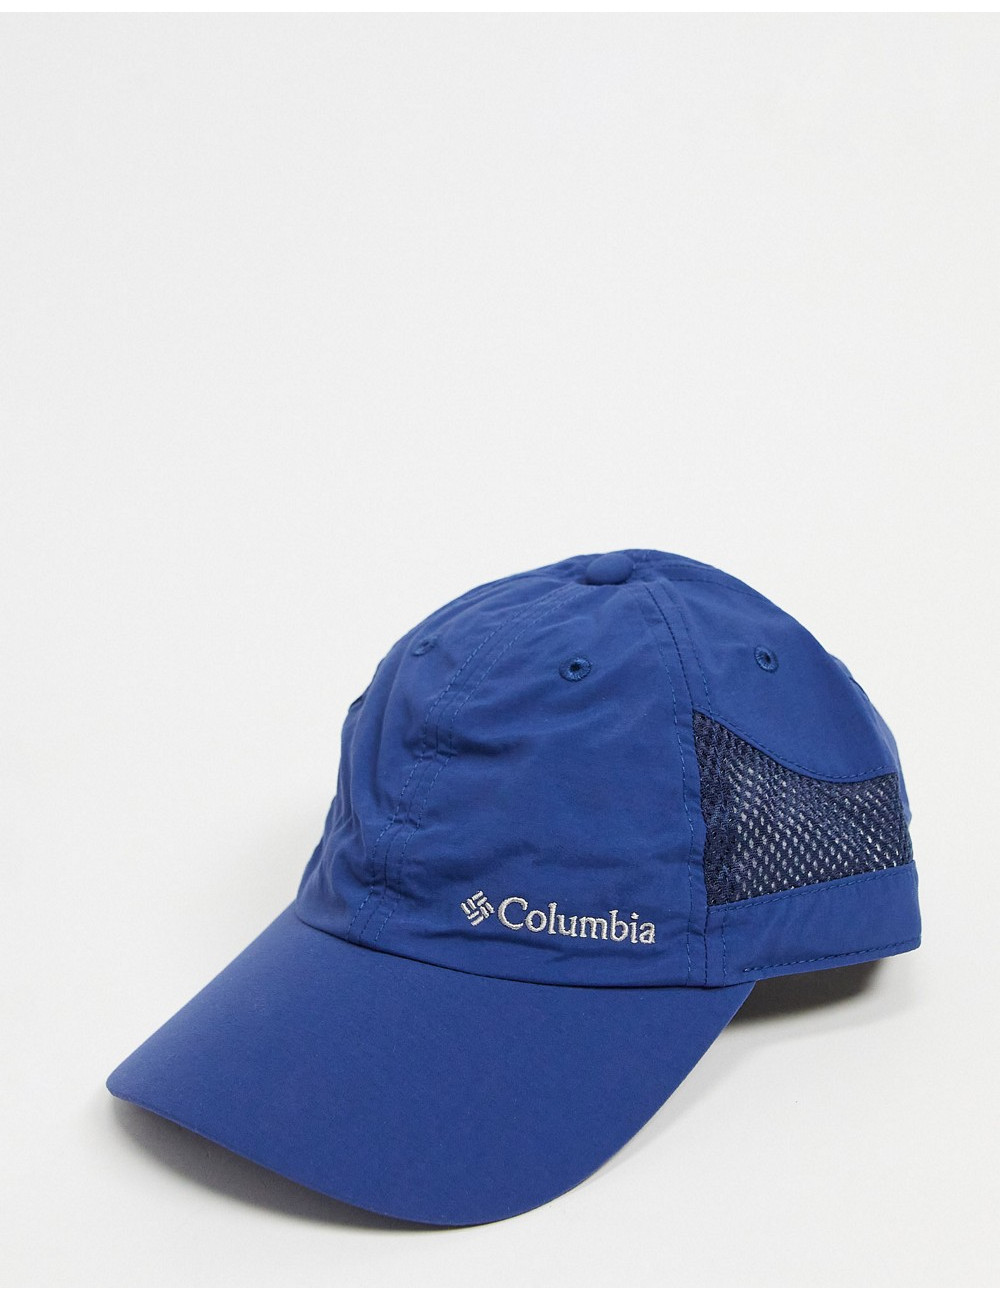 Columbia Tech Shade cap in...